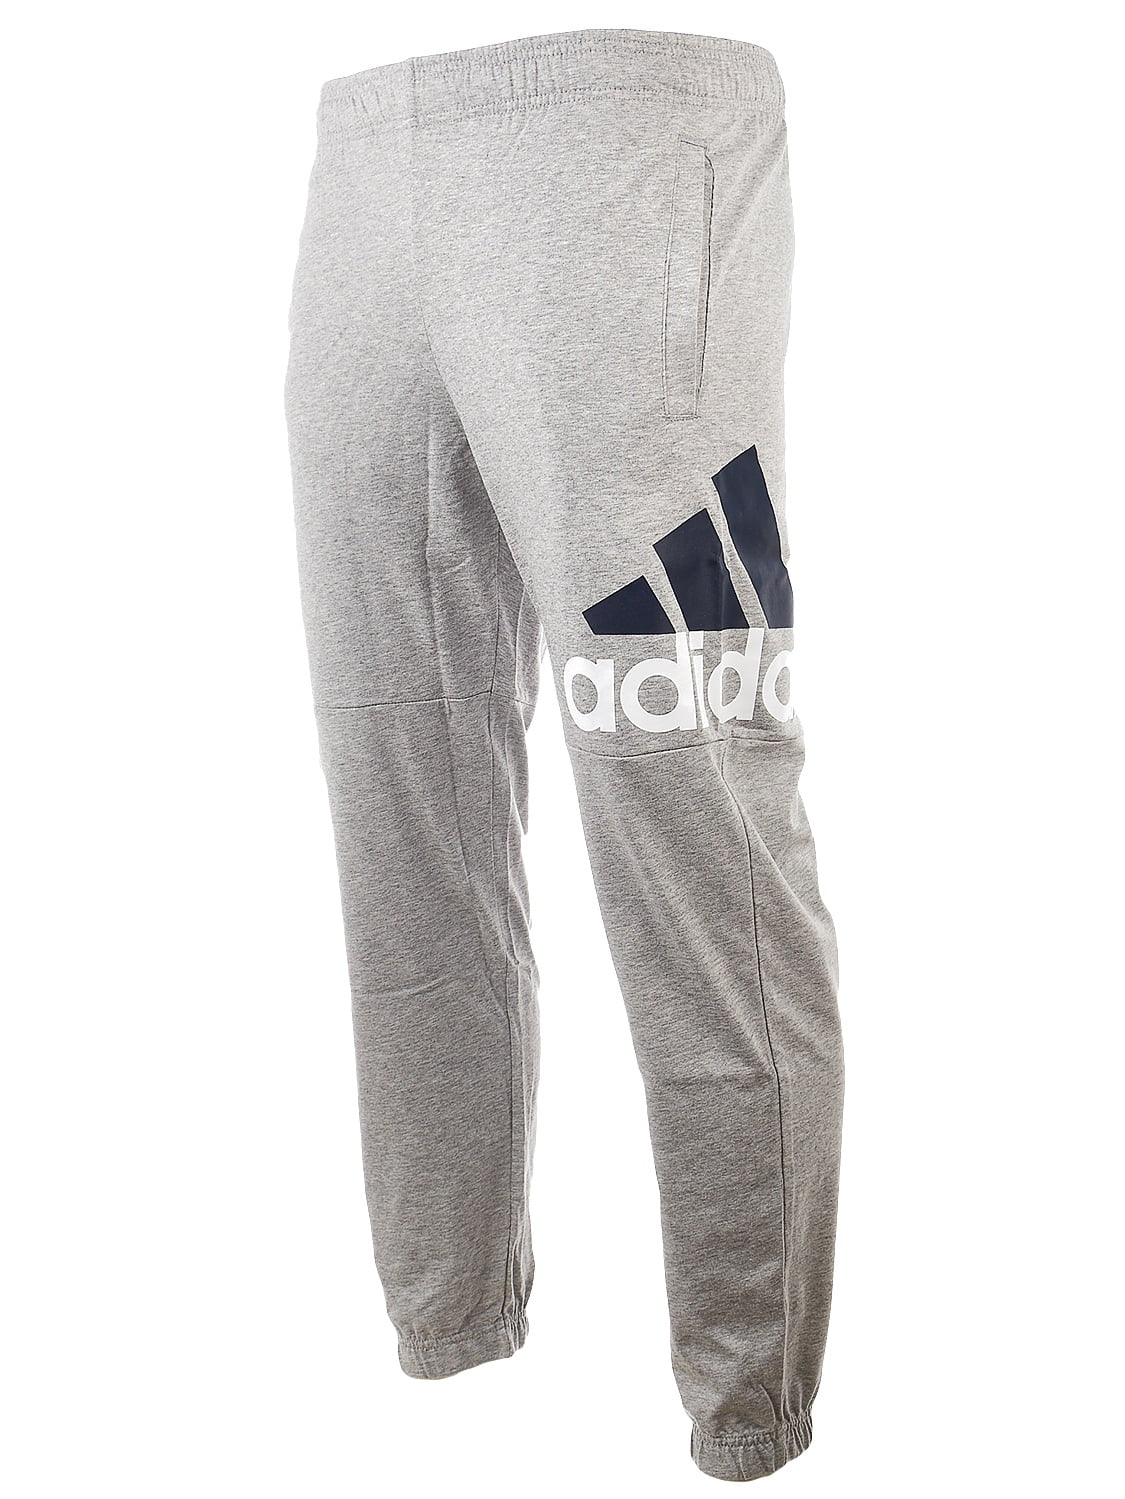 Performance - Logo Pants - - Adidas Grey Mens XL Medium Essentials Heather/White/Black